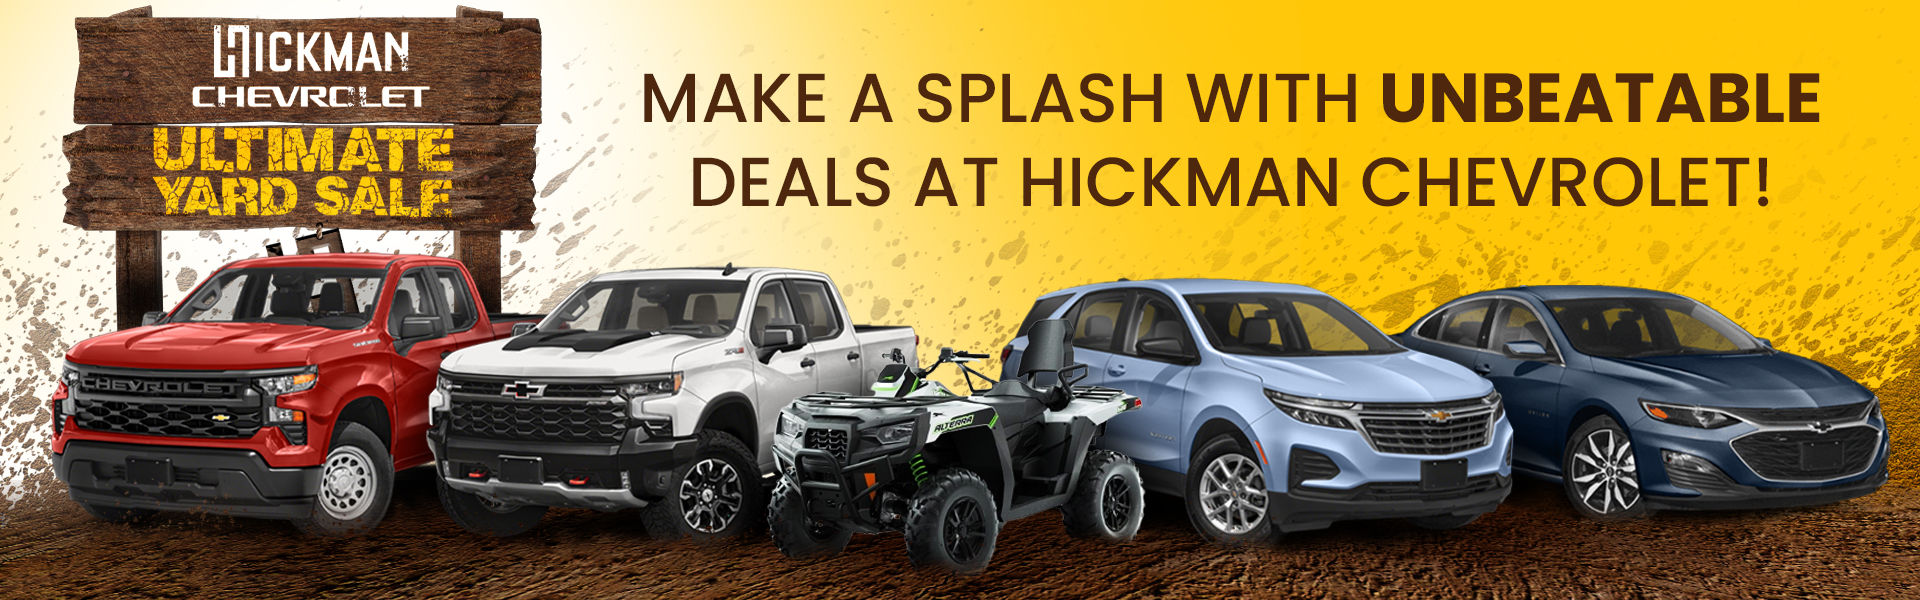 Hickman Chevrolet Ultimate Yard Sale